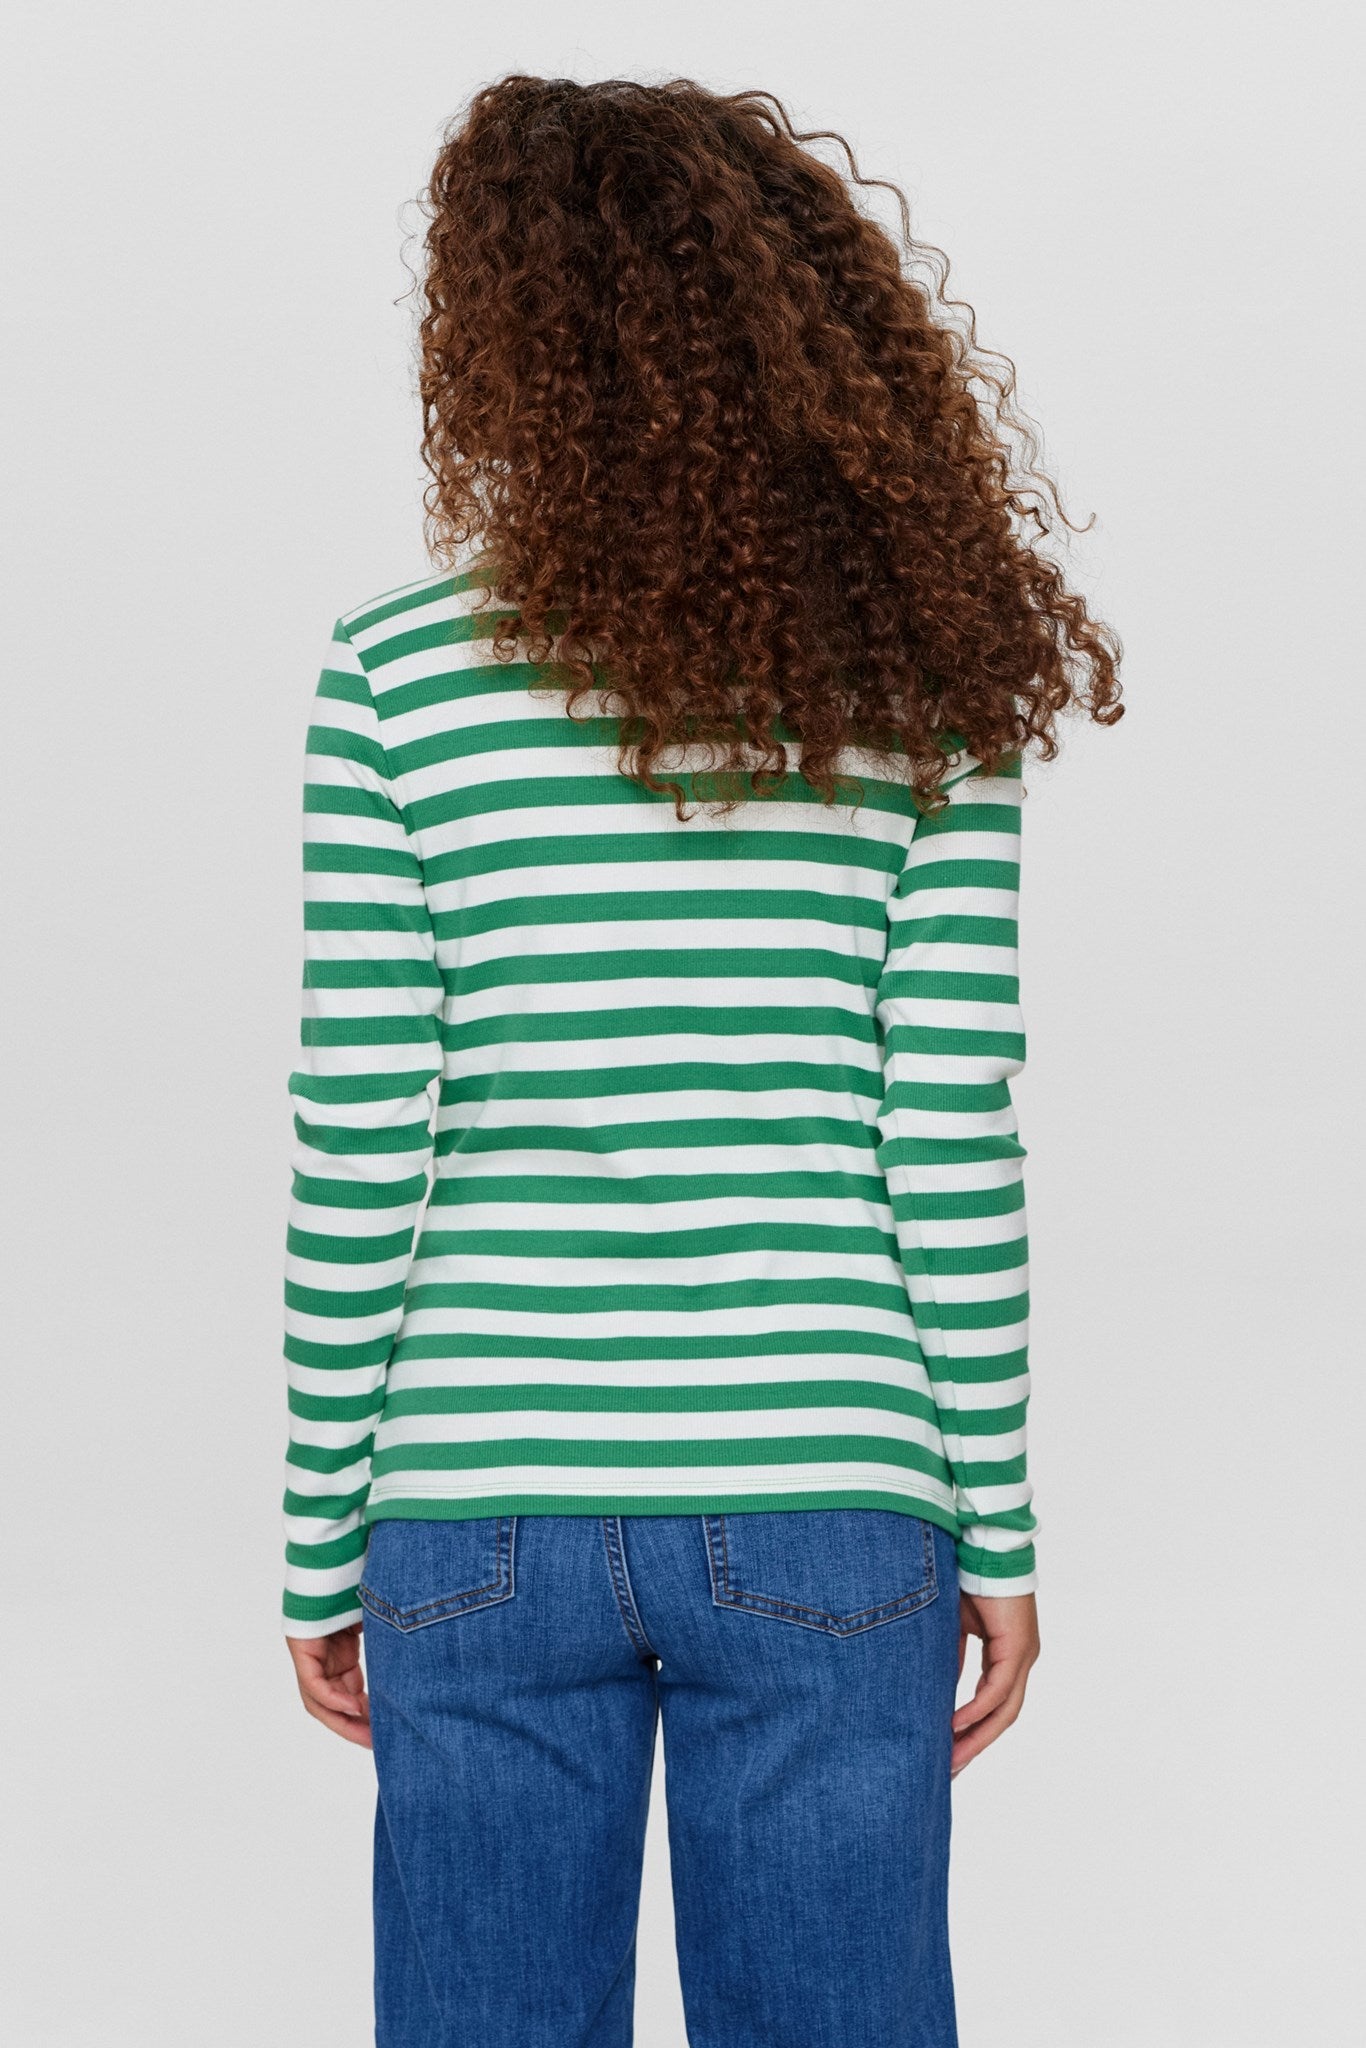 Camiseta de rayas verde de algodón orgánico